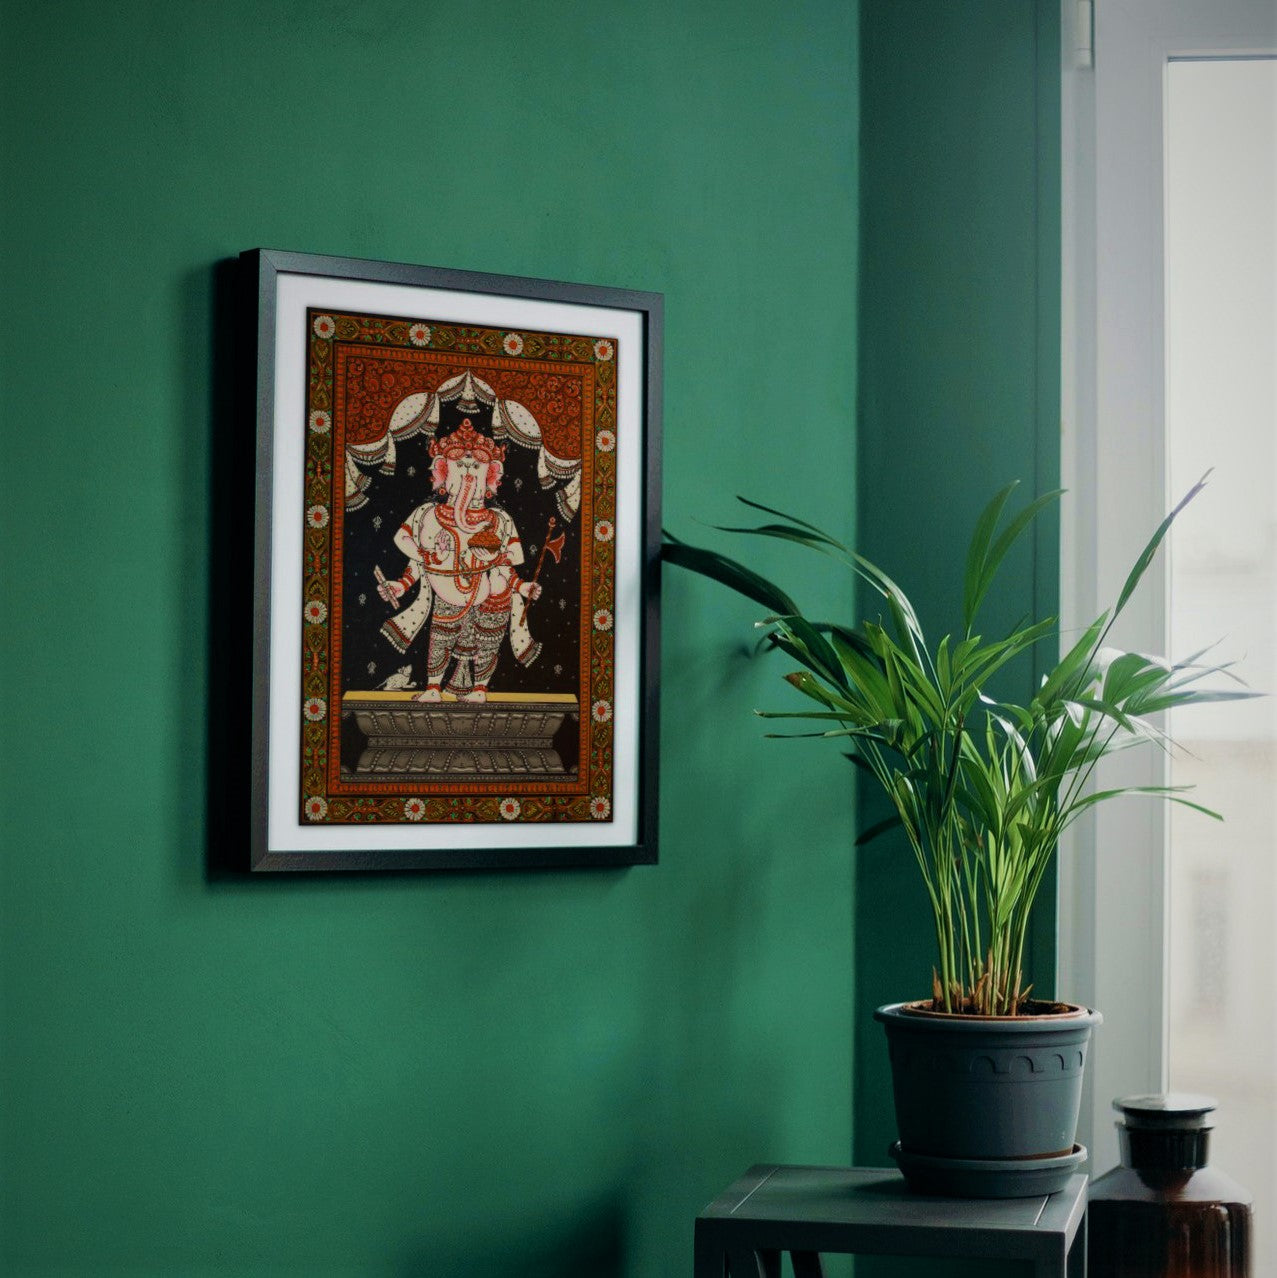 The Ganesha Art Pattachitra Painting | Pattachitra Framed Wall Art